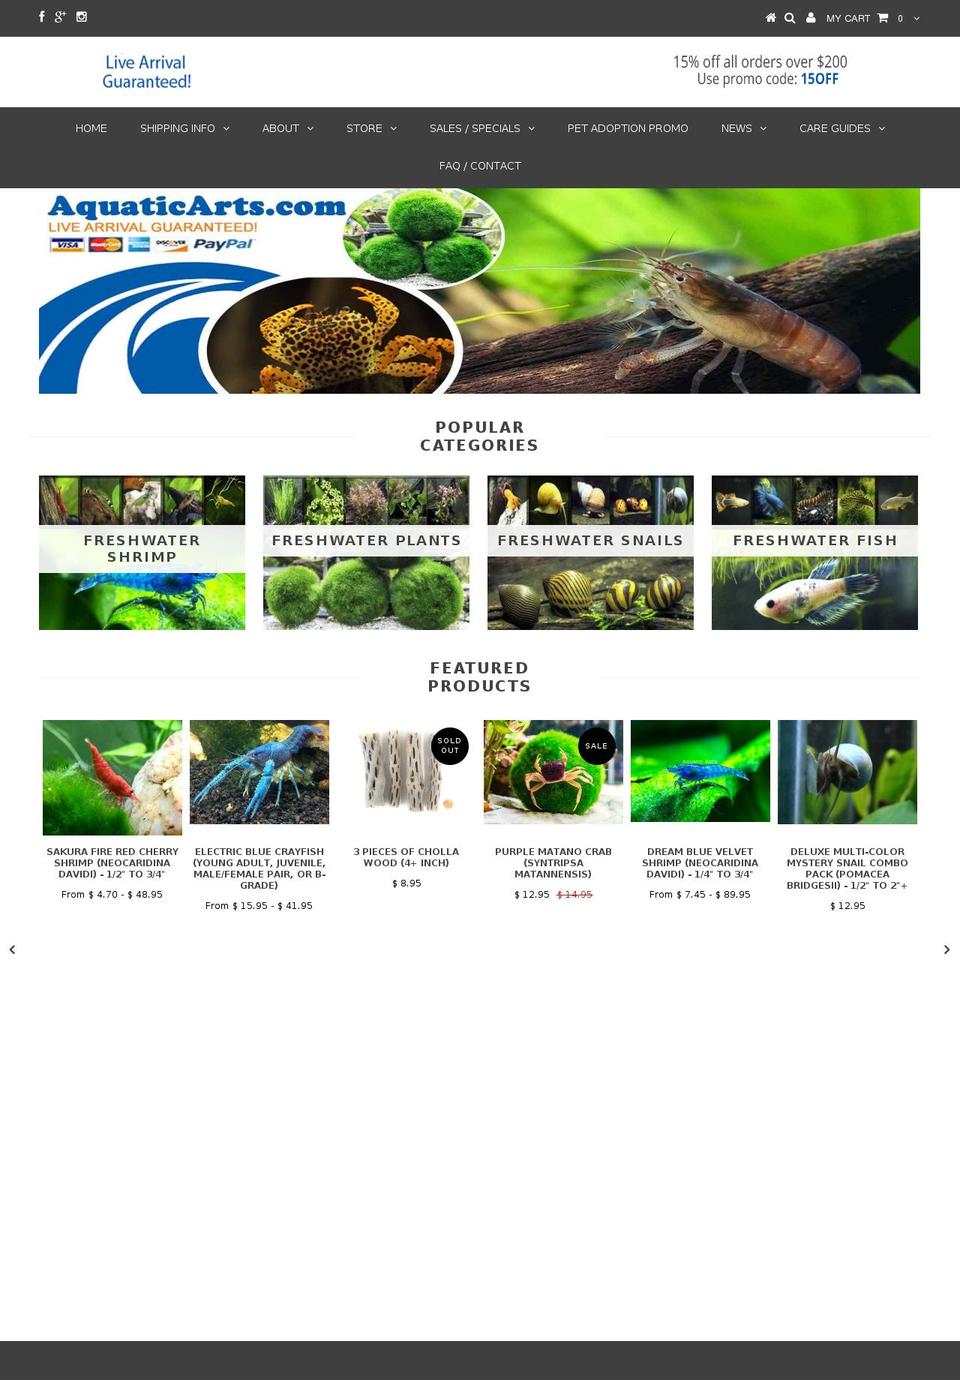 aquaticarts.com shopify website screenshot